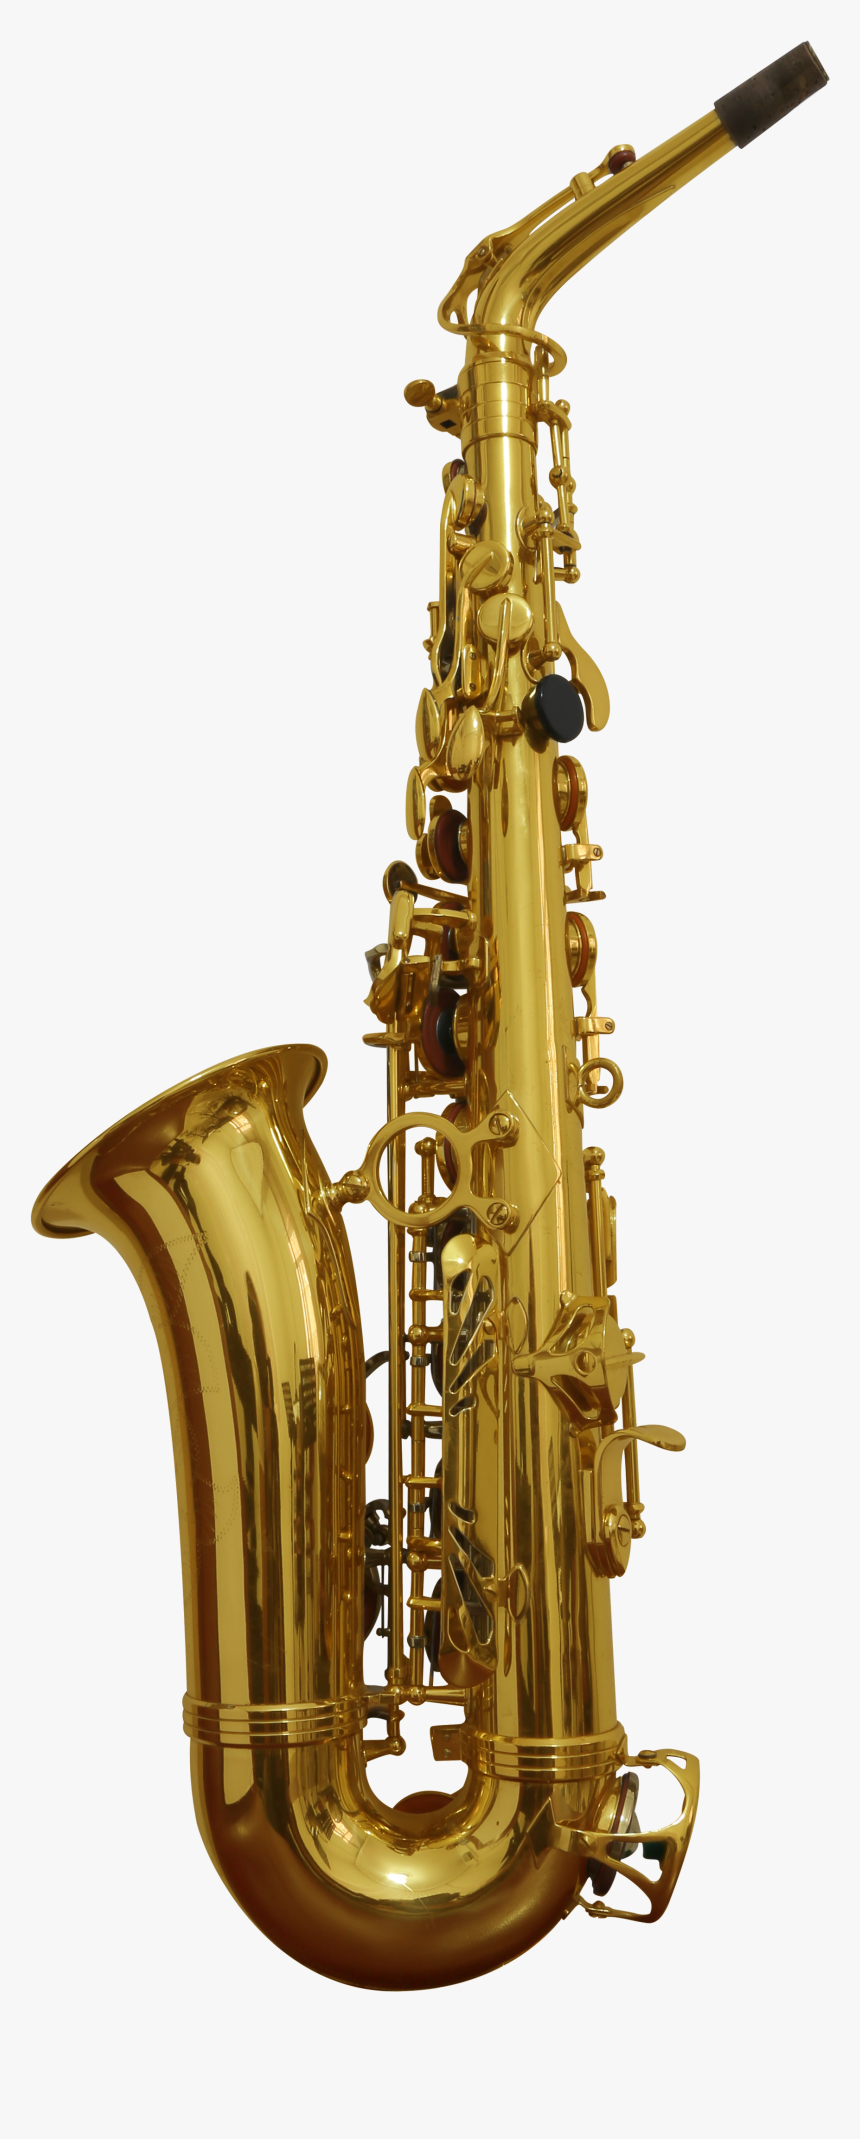 Saxophone Png Clip Art - Saxophone Png Transparent, Png Download, Free Download